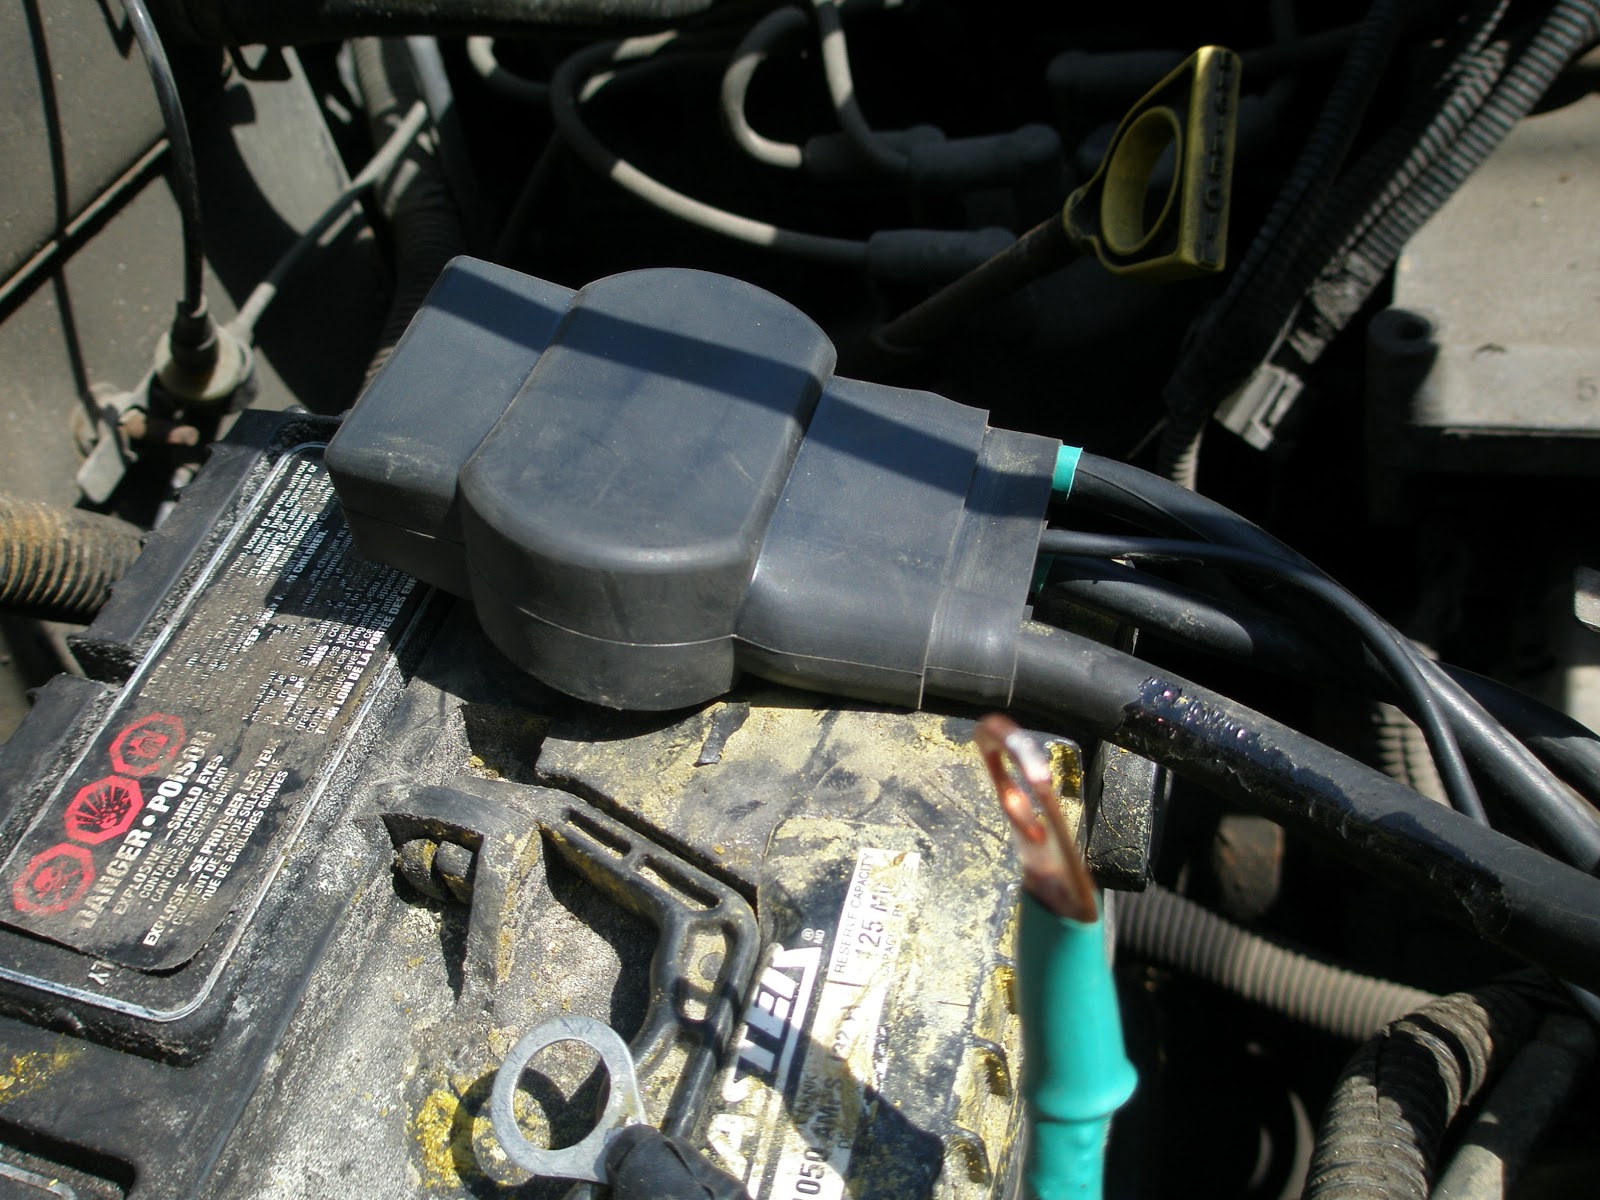 JeepGarage.ca: Battery Terminal Upgrade